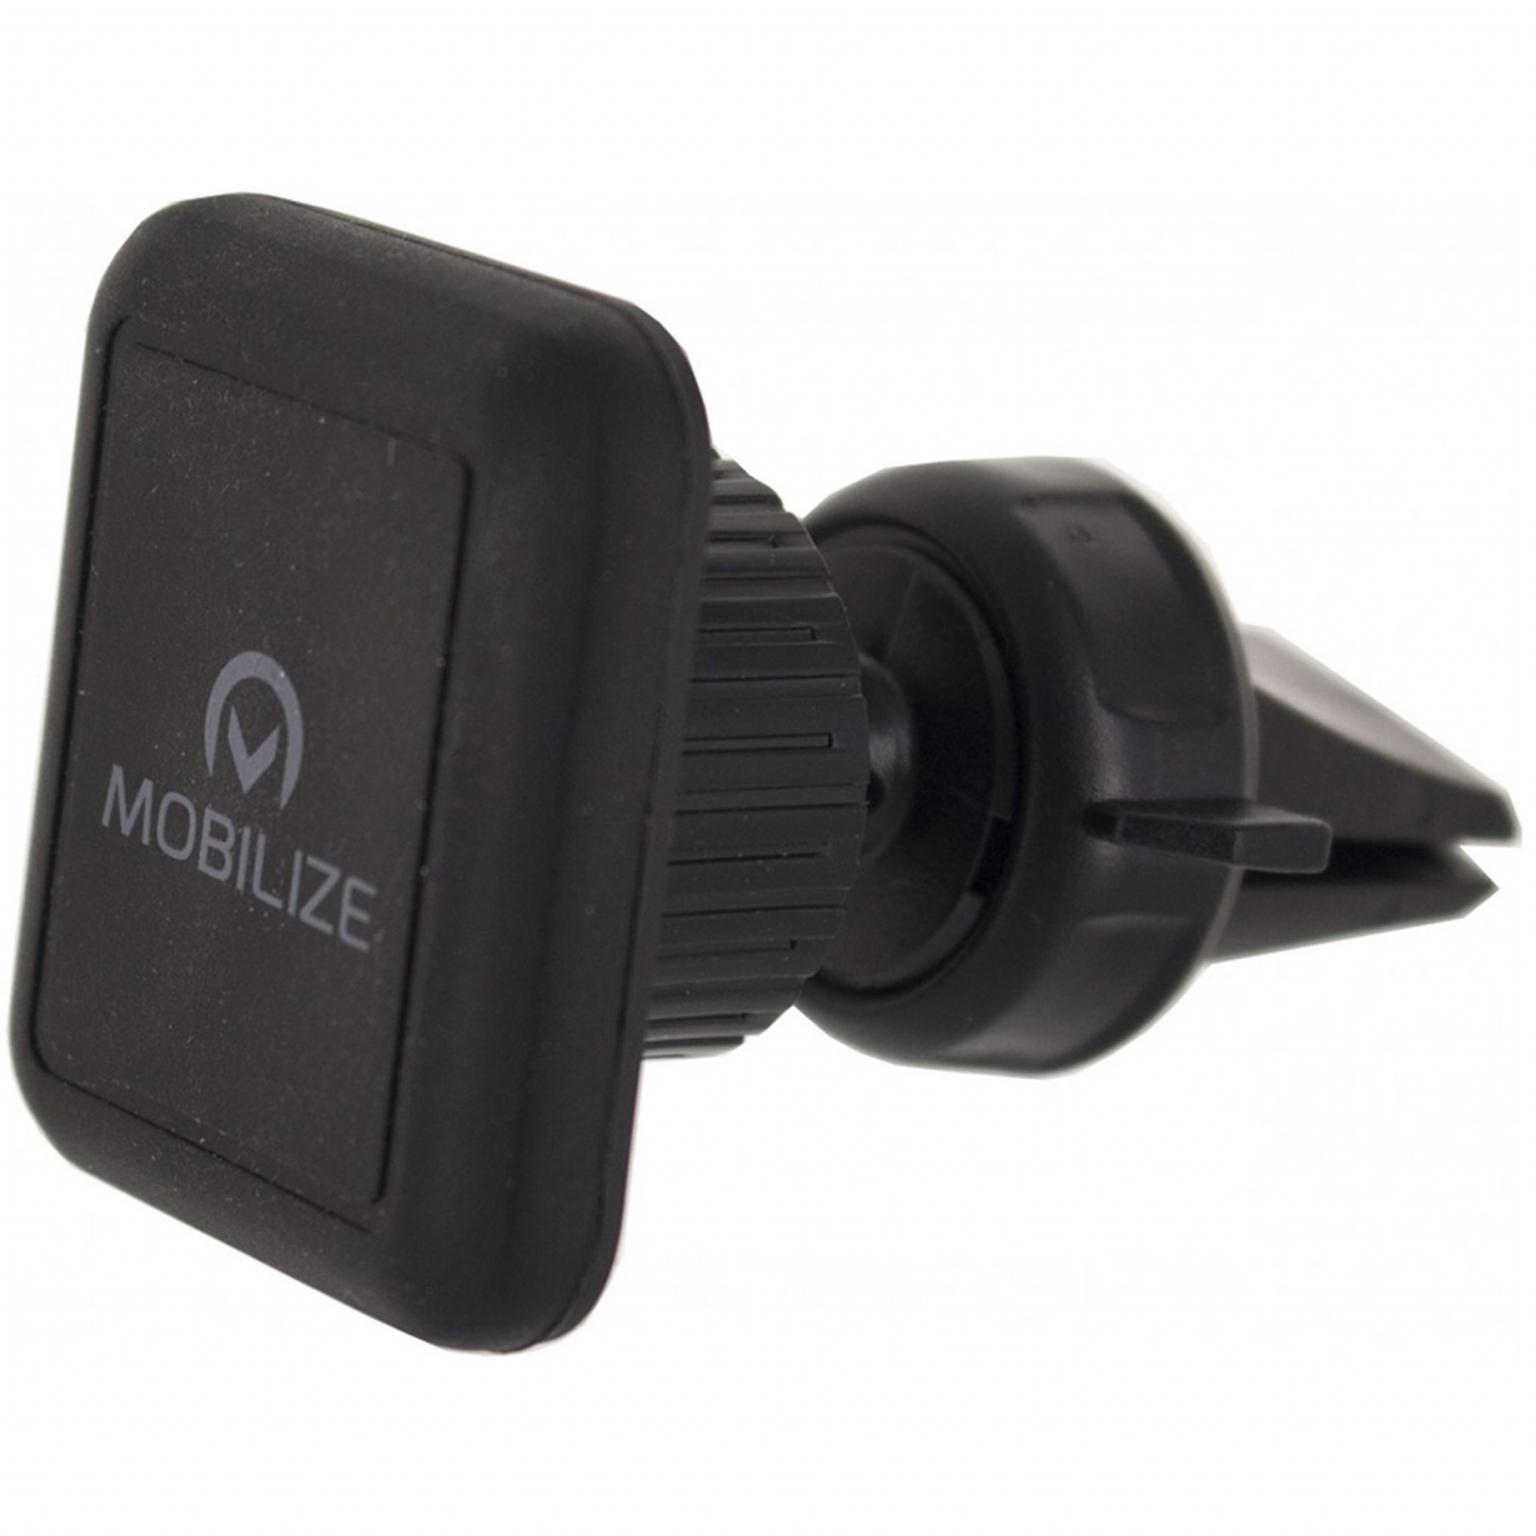 OnePlus 5 - Autohalterung - Mobilize